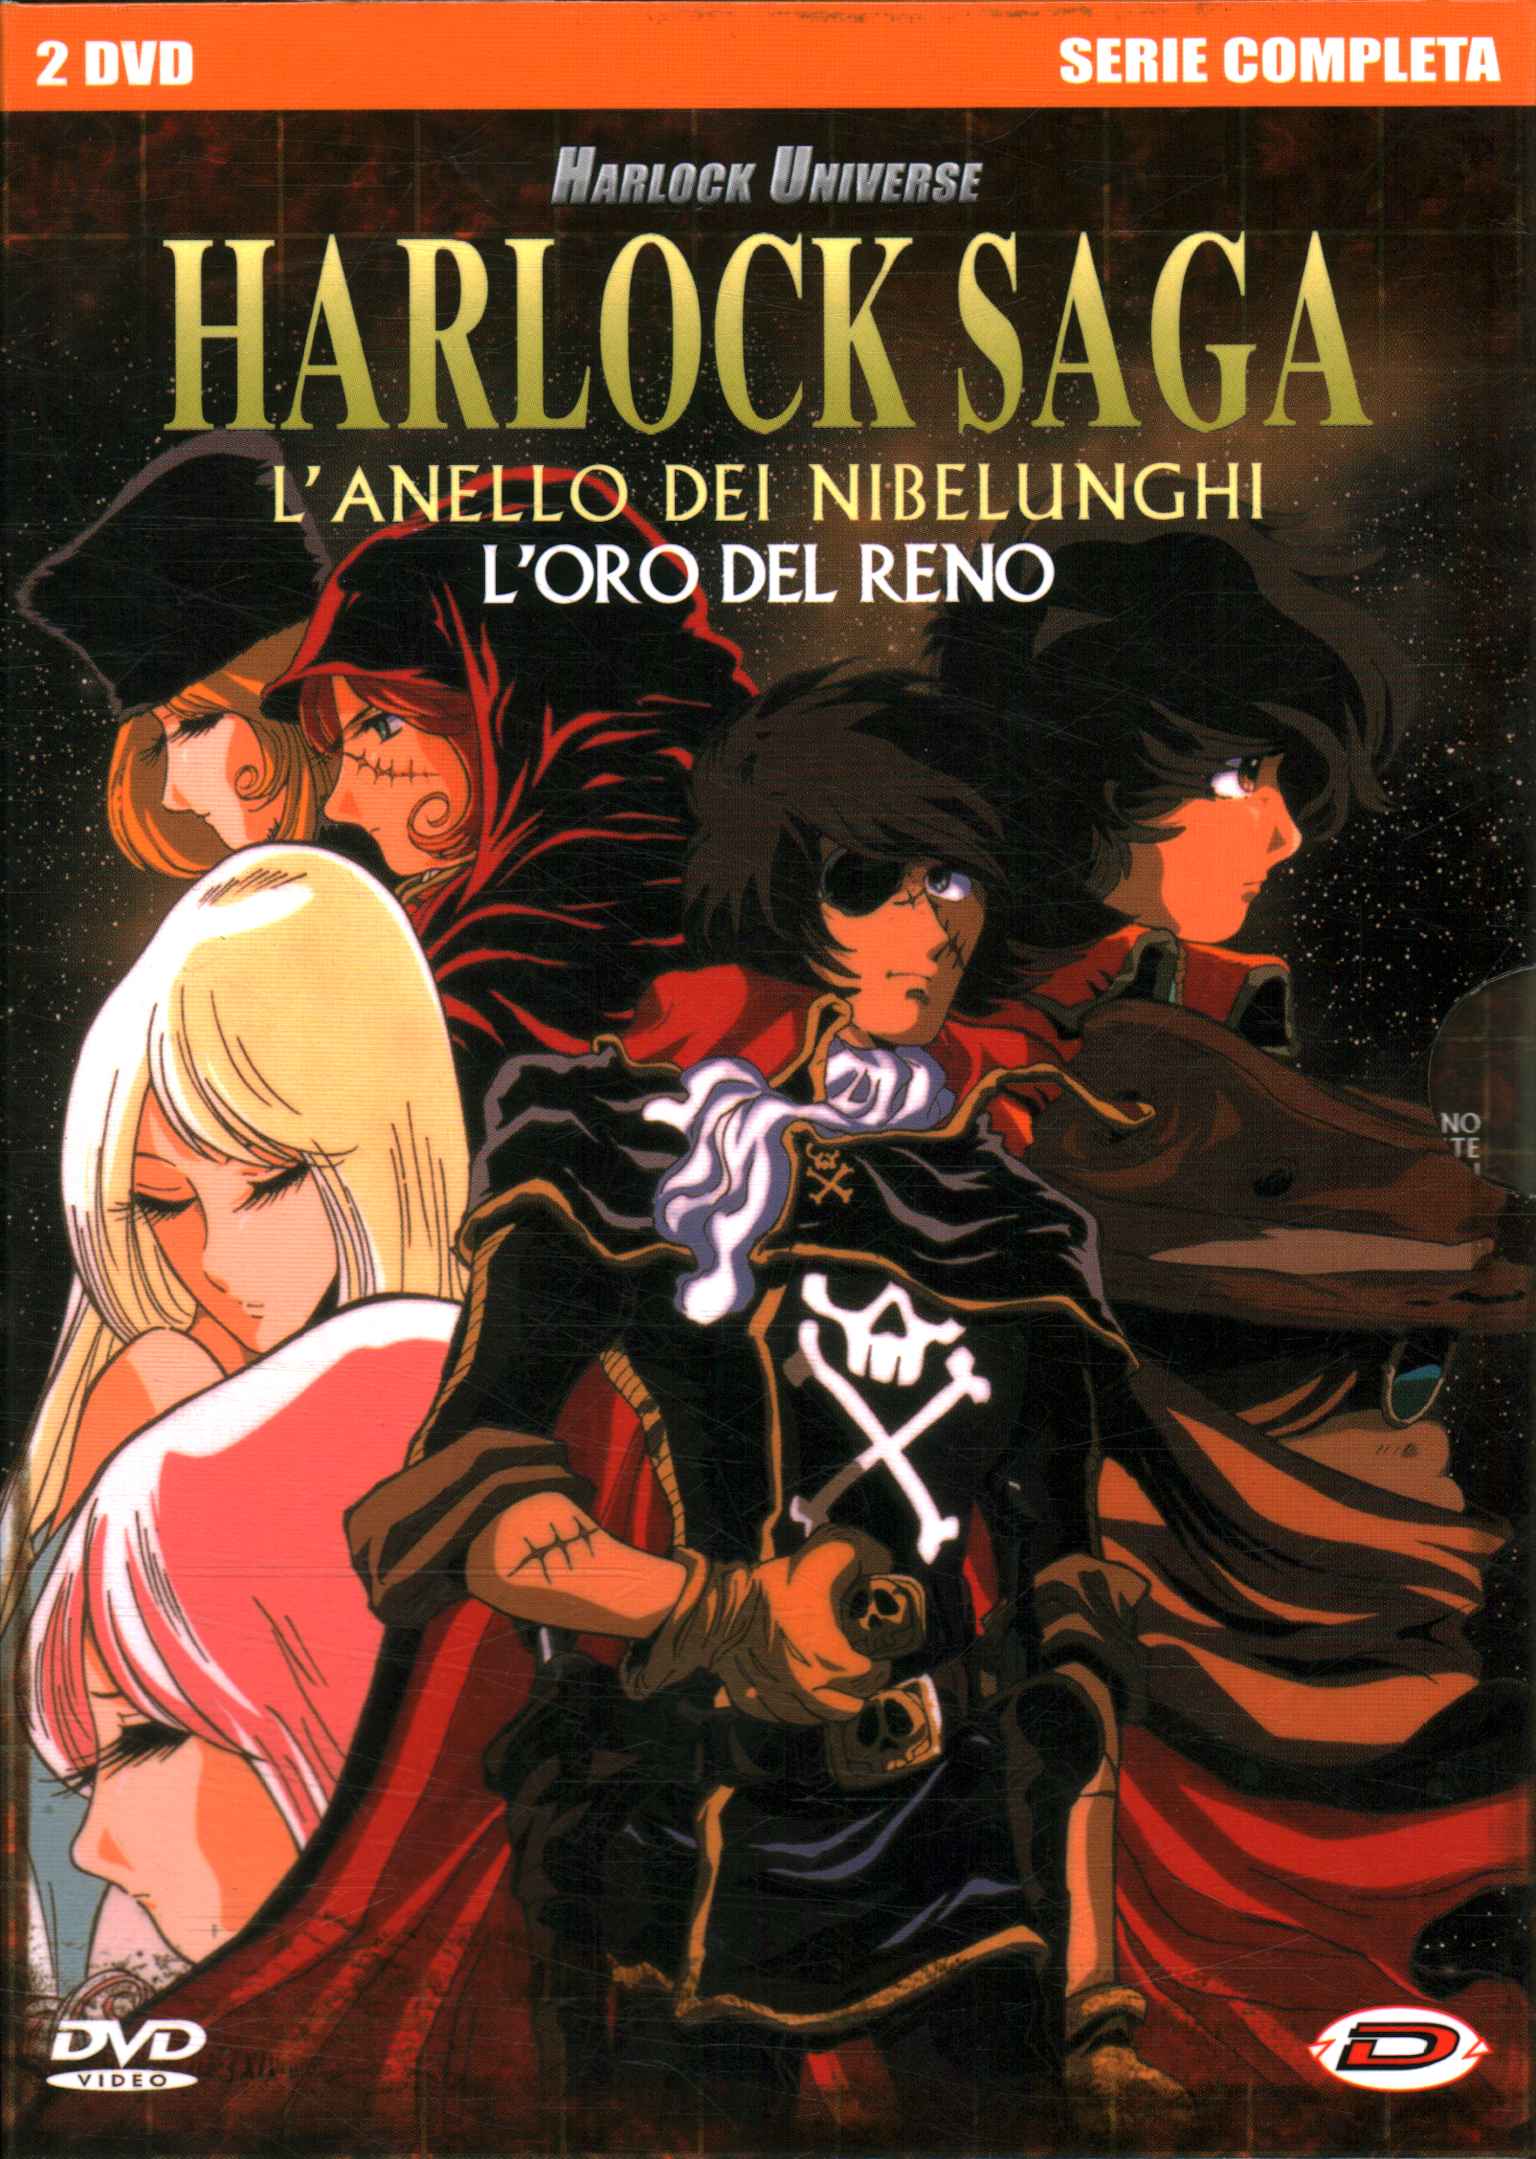 HARLOCK SAGA. L'Anello dei Nibe,Harlock Saga. Serie completa (2 DVD%2